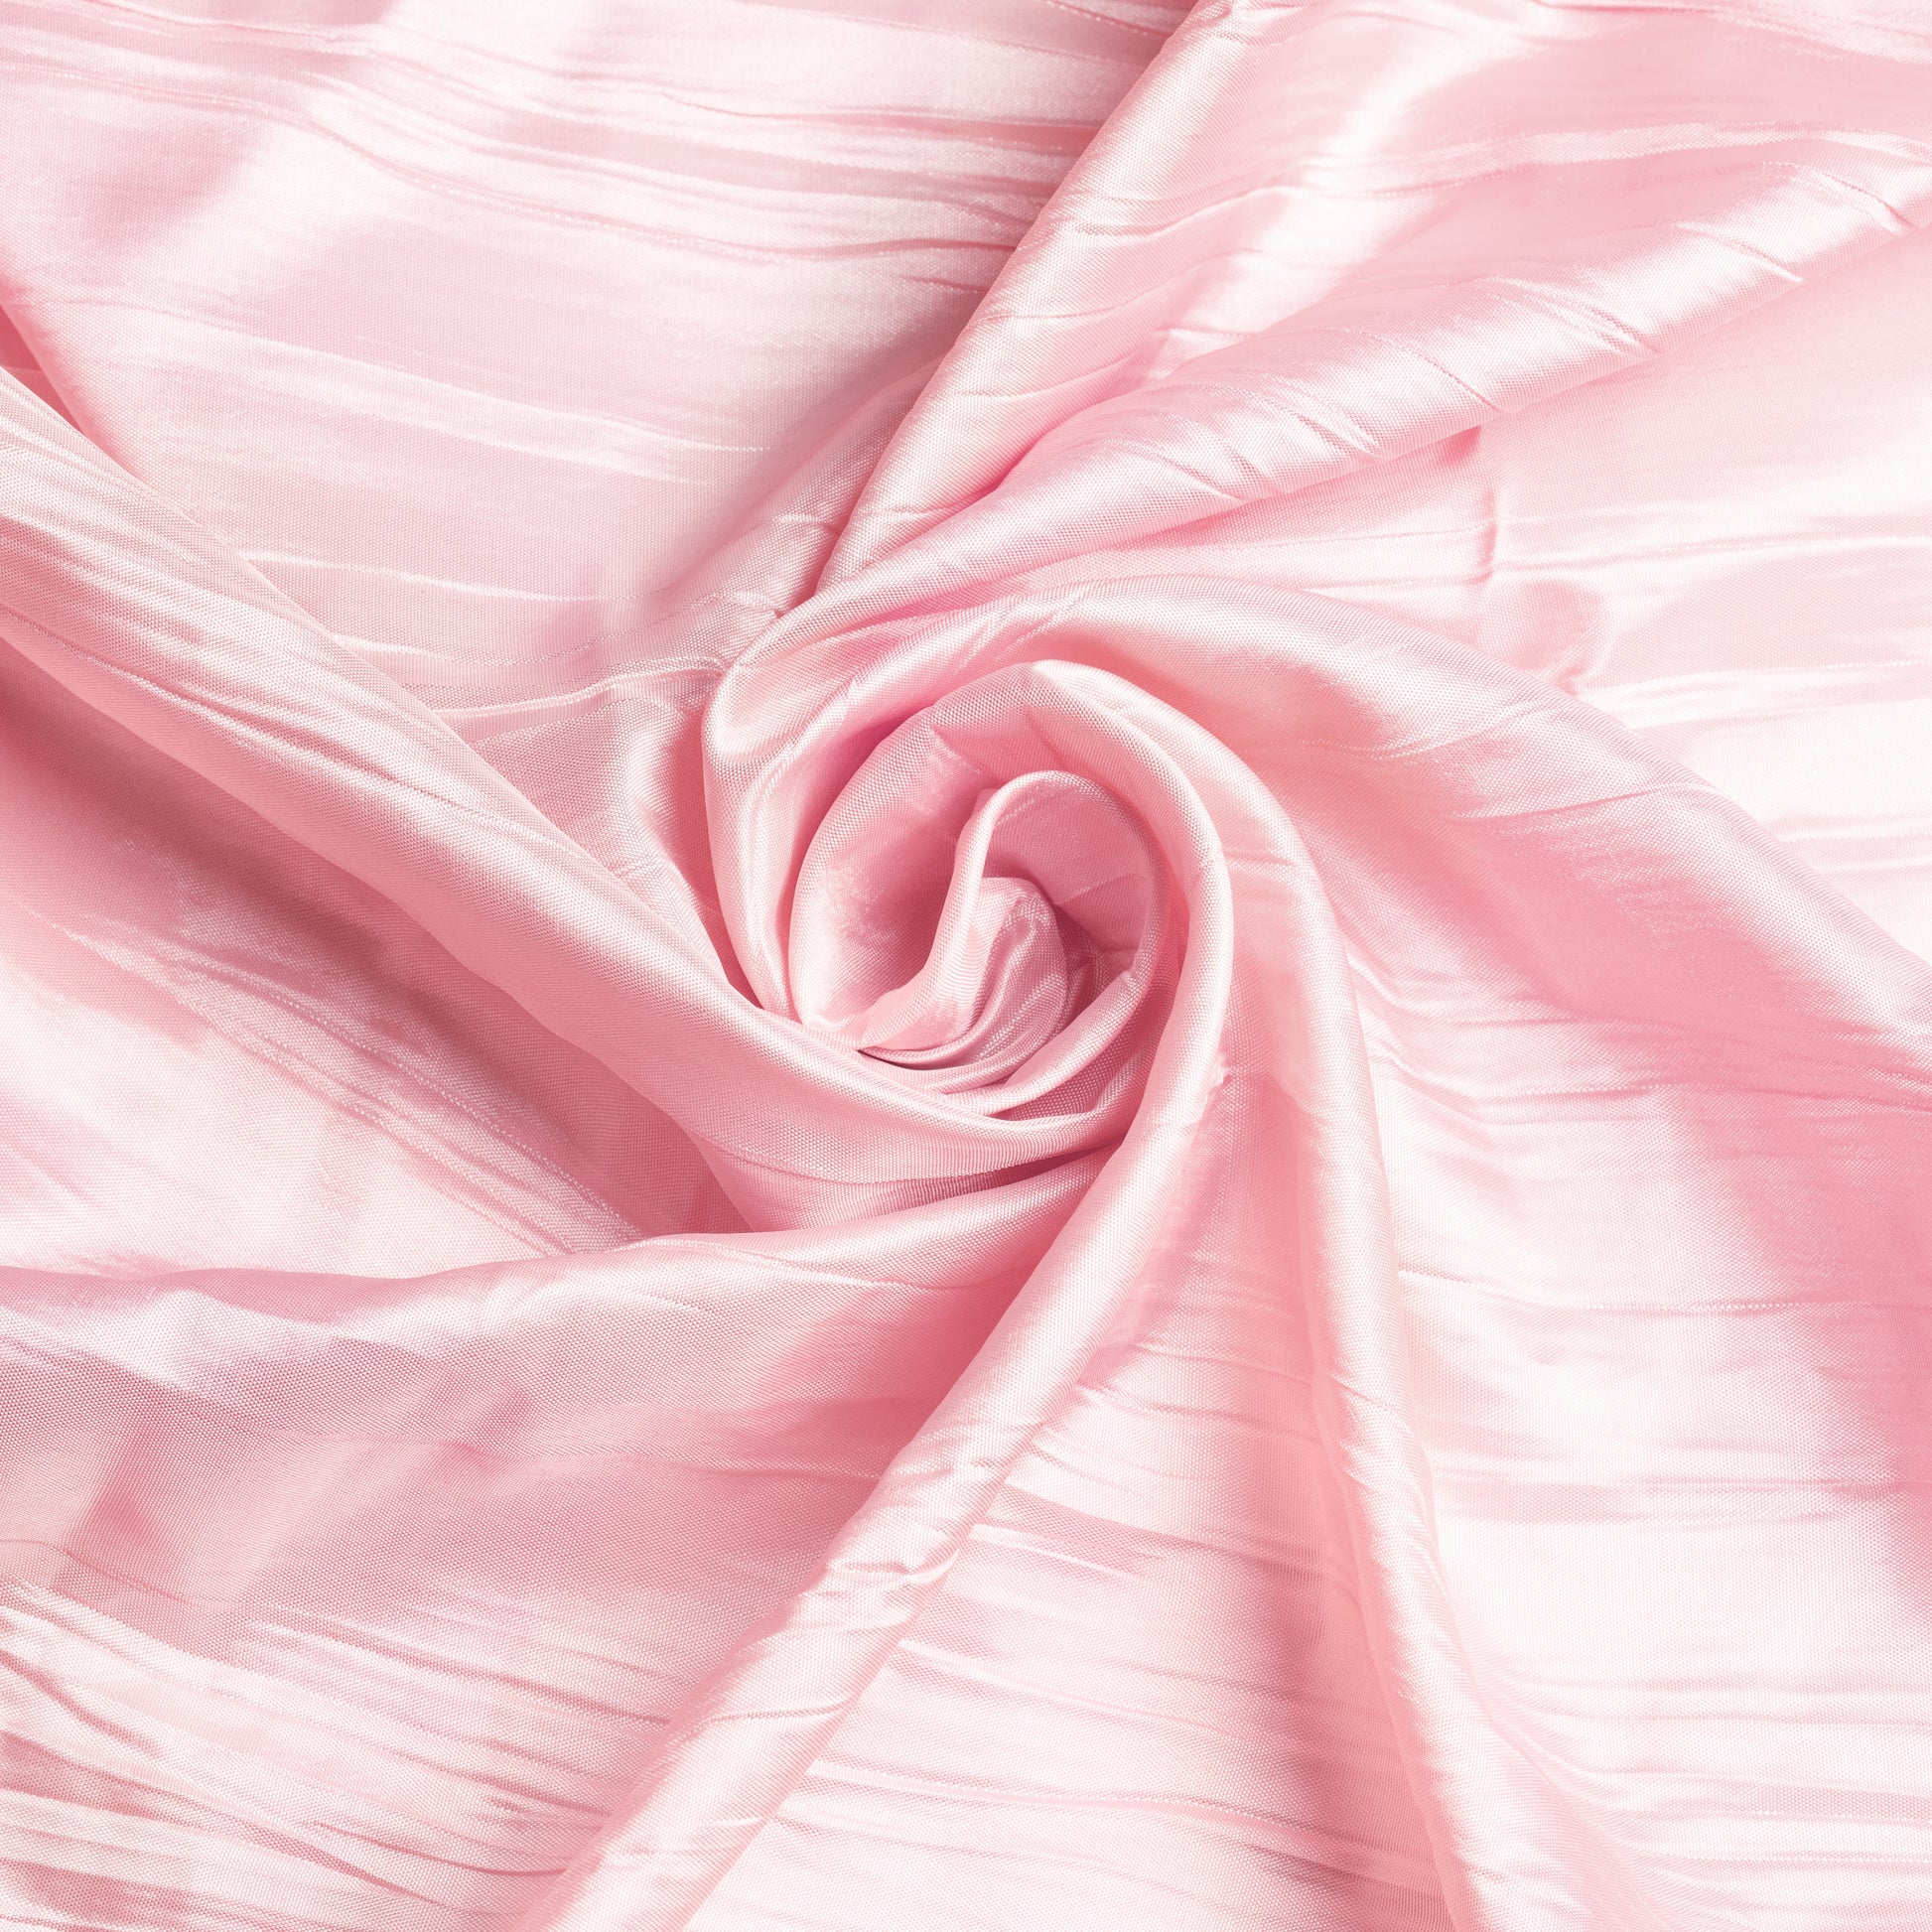 Accordion Crinkle Taffeta 5 yards x 54" Fabric Roll Bolt - Pink - CV Linens